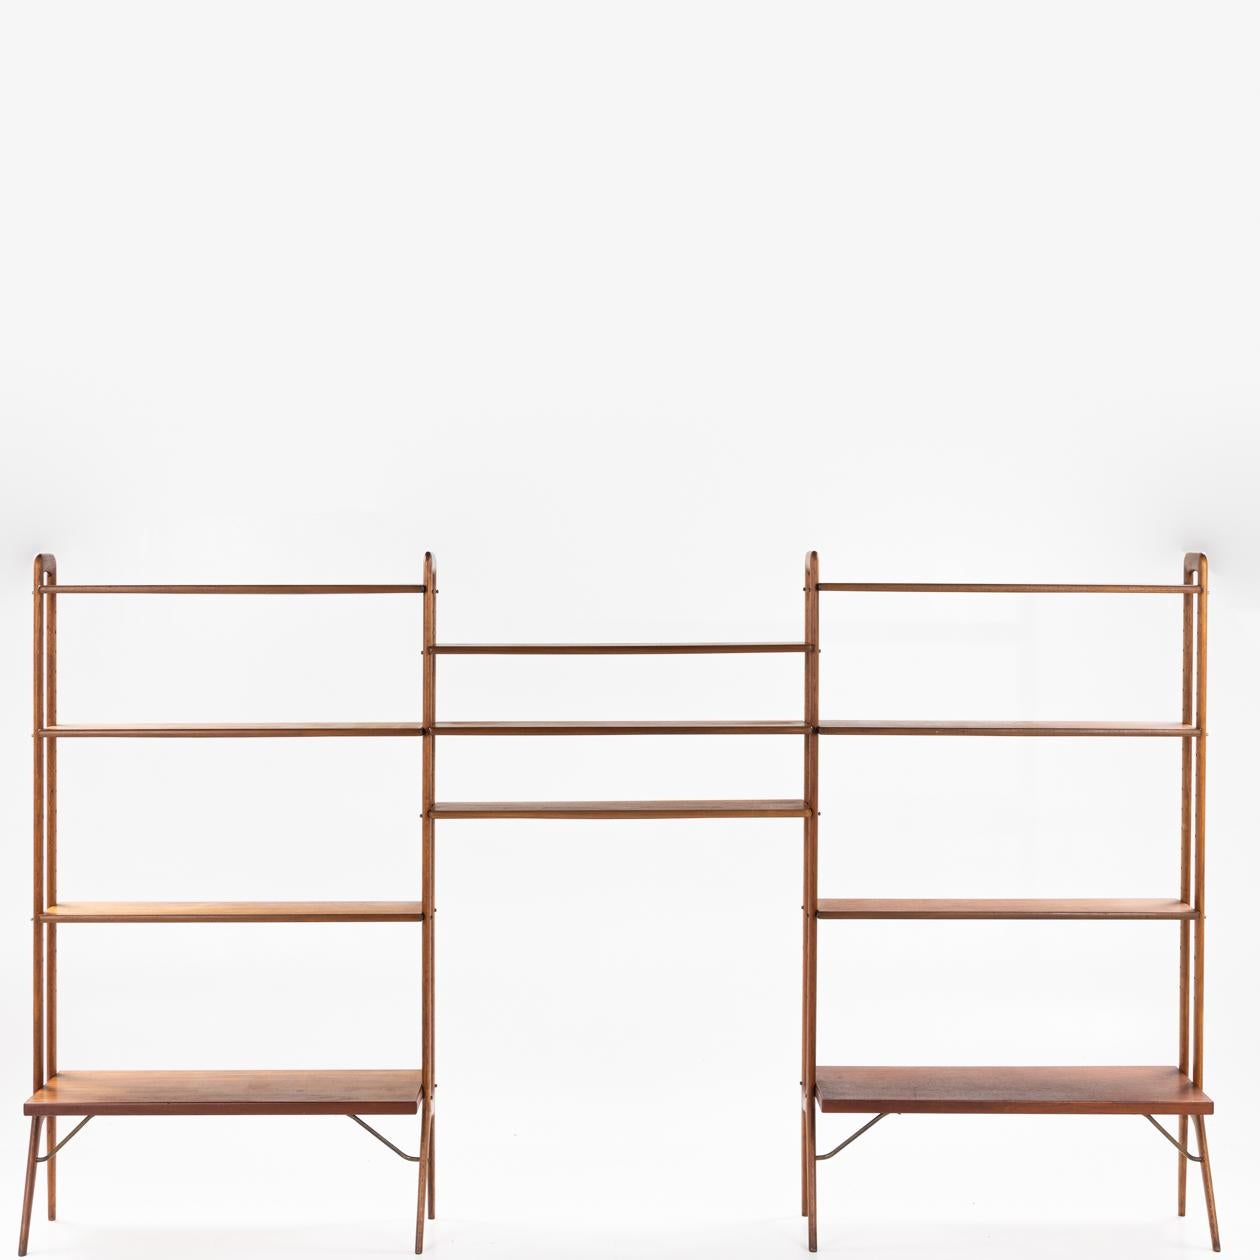 Freestanding three-compartment shelving system with oak legs and teak shelves. Adjustable shelves. Kurt Østervig / KP Møbler